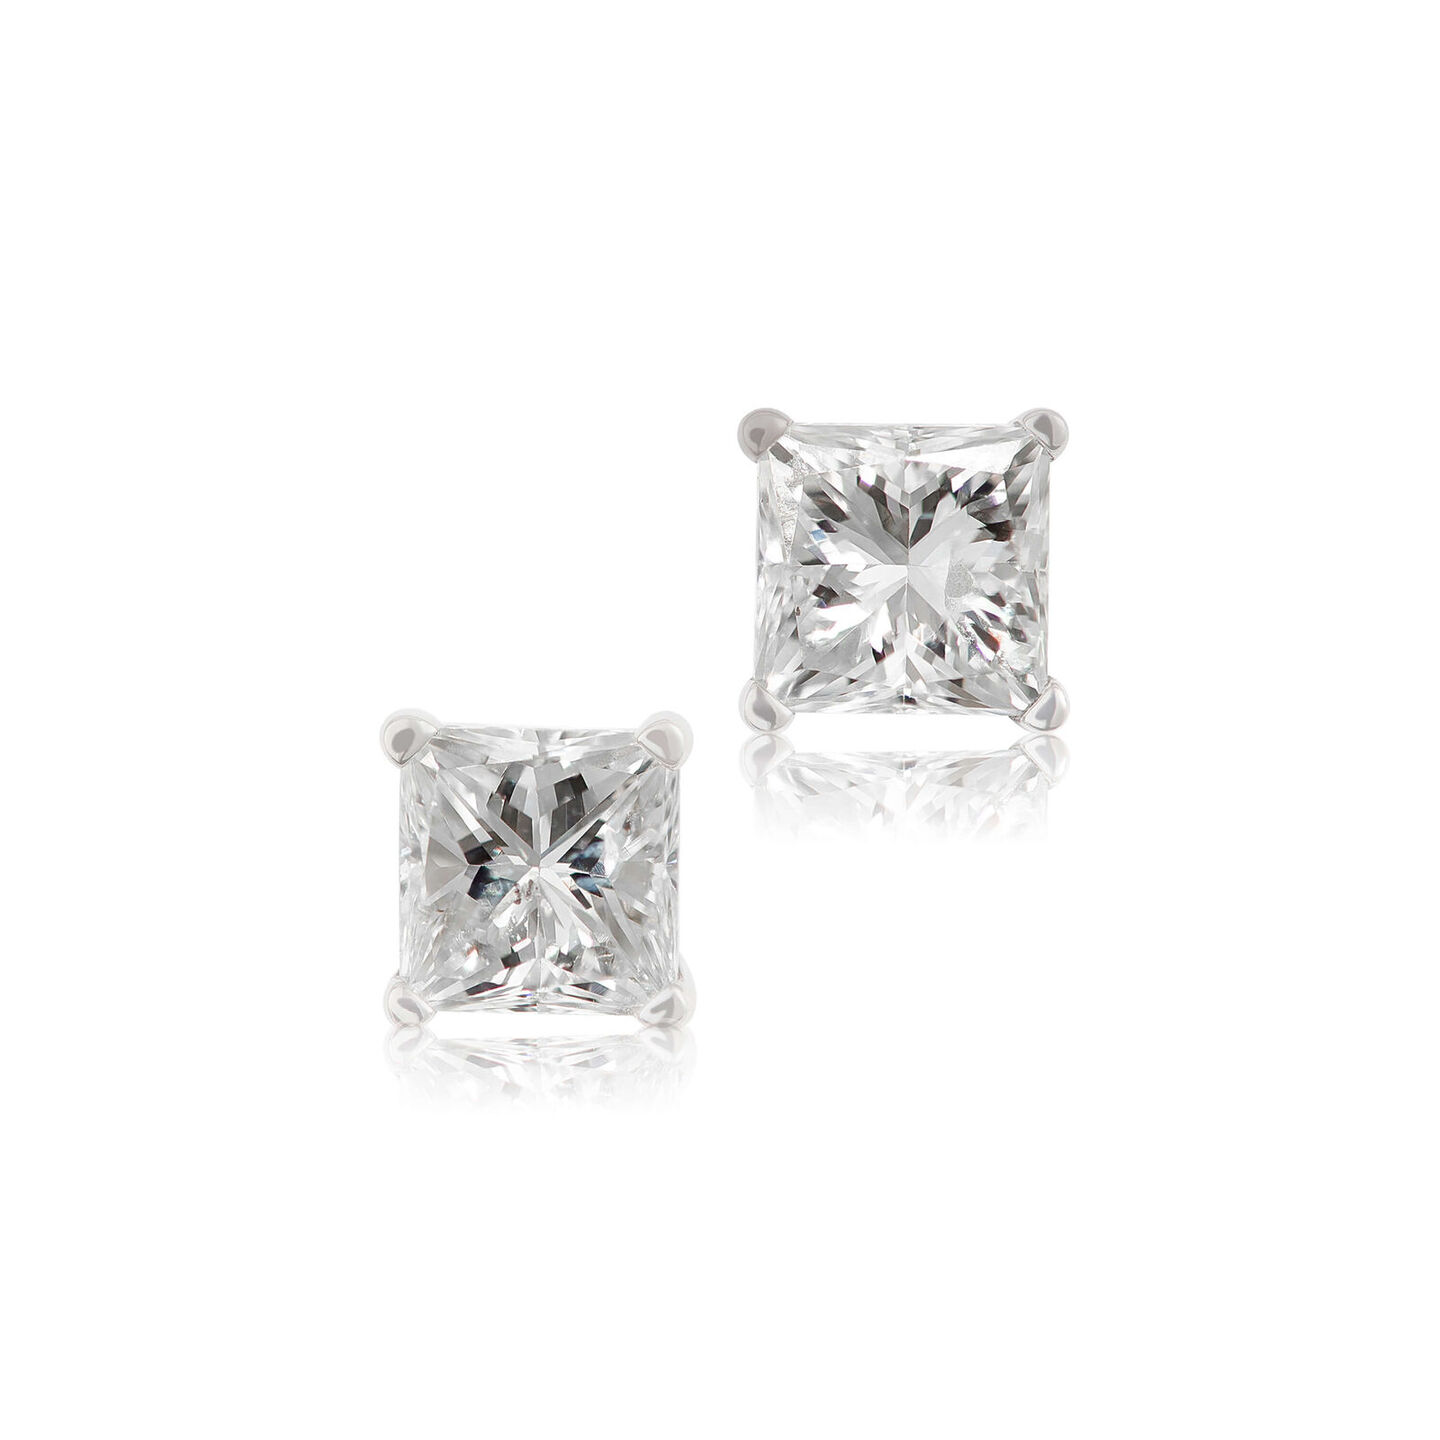 Princess cut diamond stud earrings sparkle against a white background